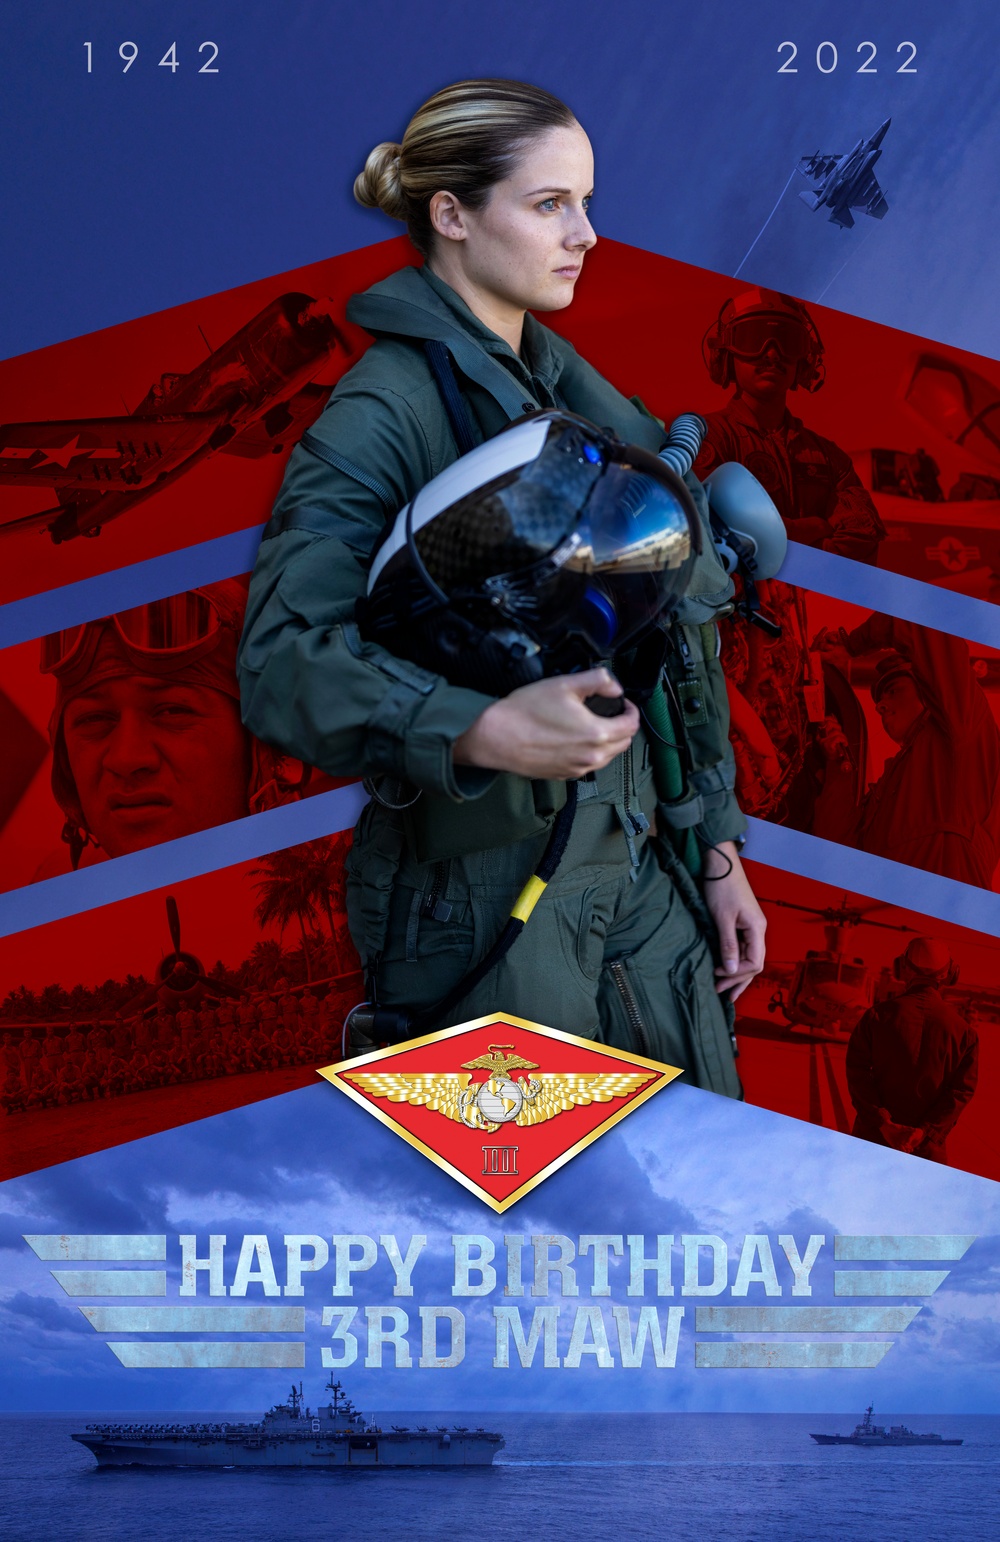 Happy 80th Birthday 3rd Marine Aircraft Wing